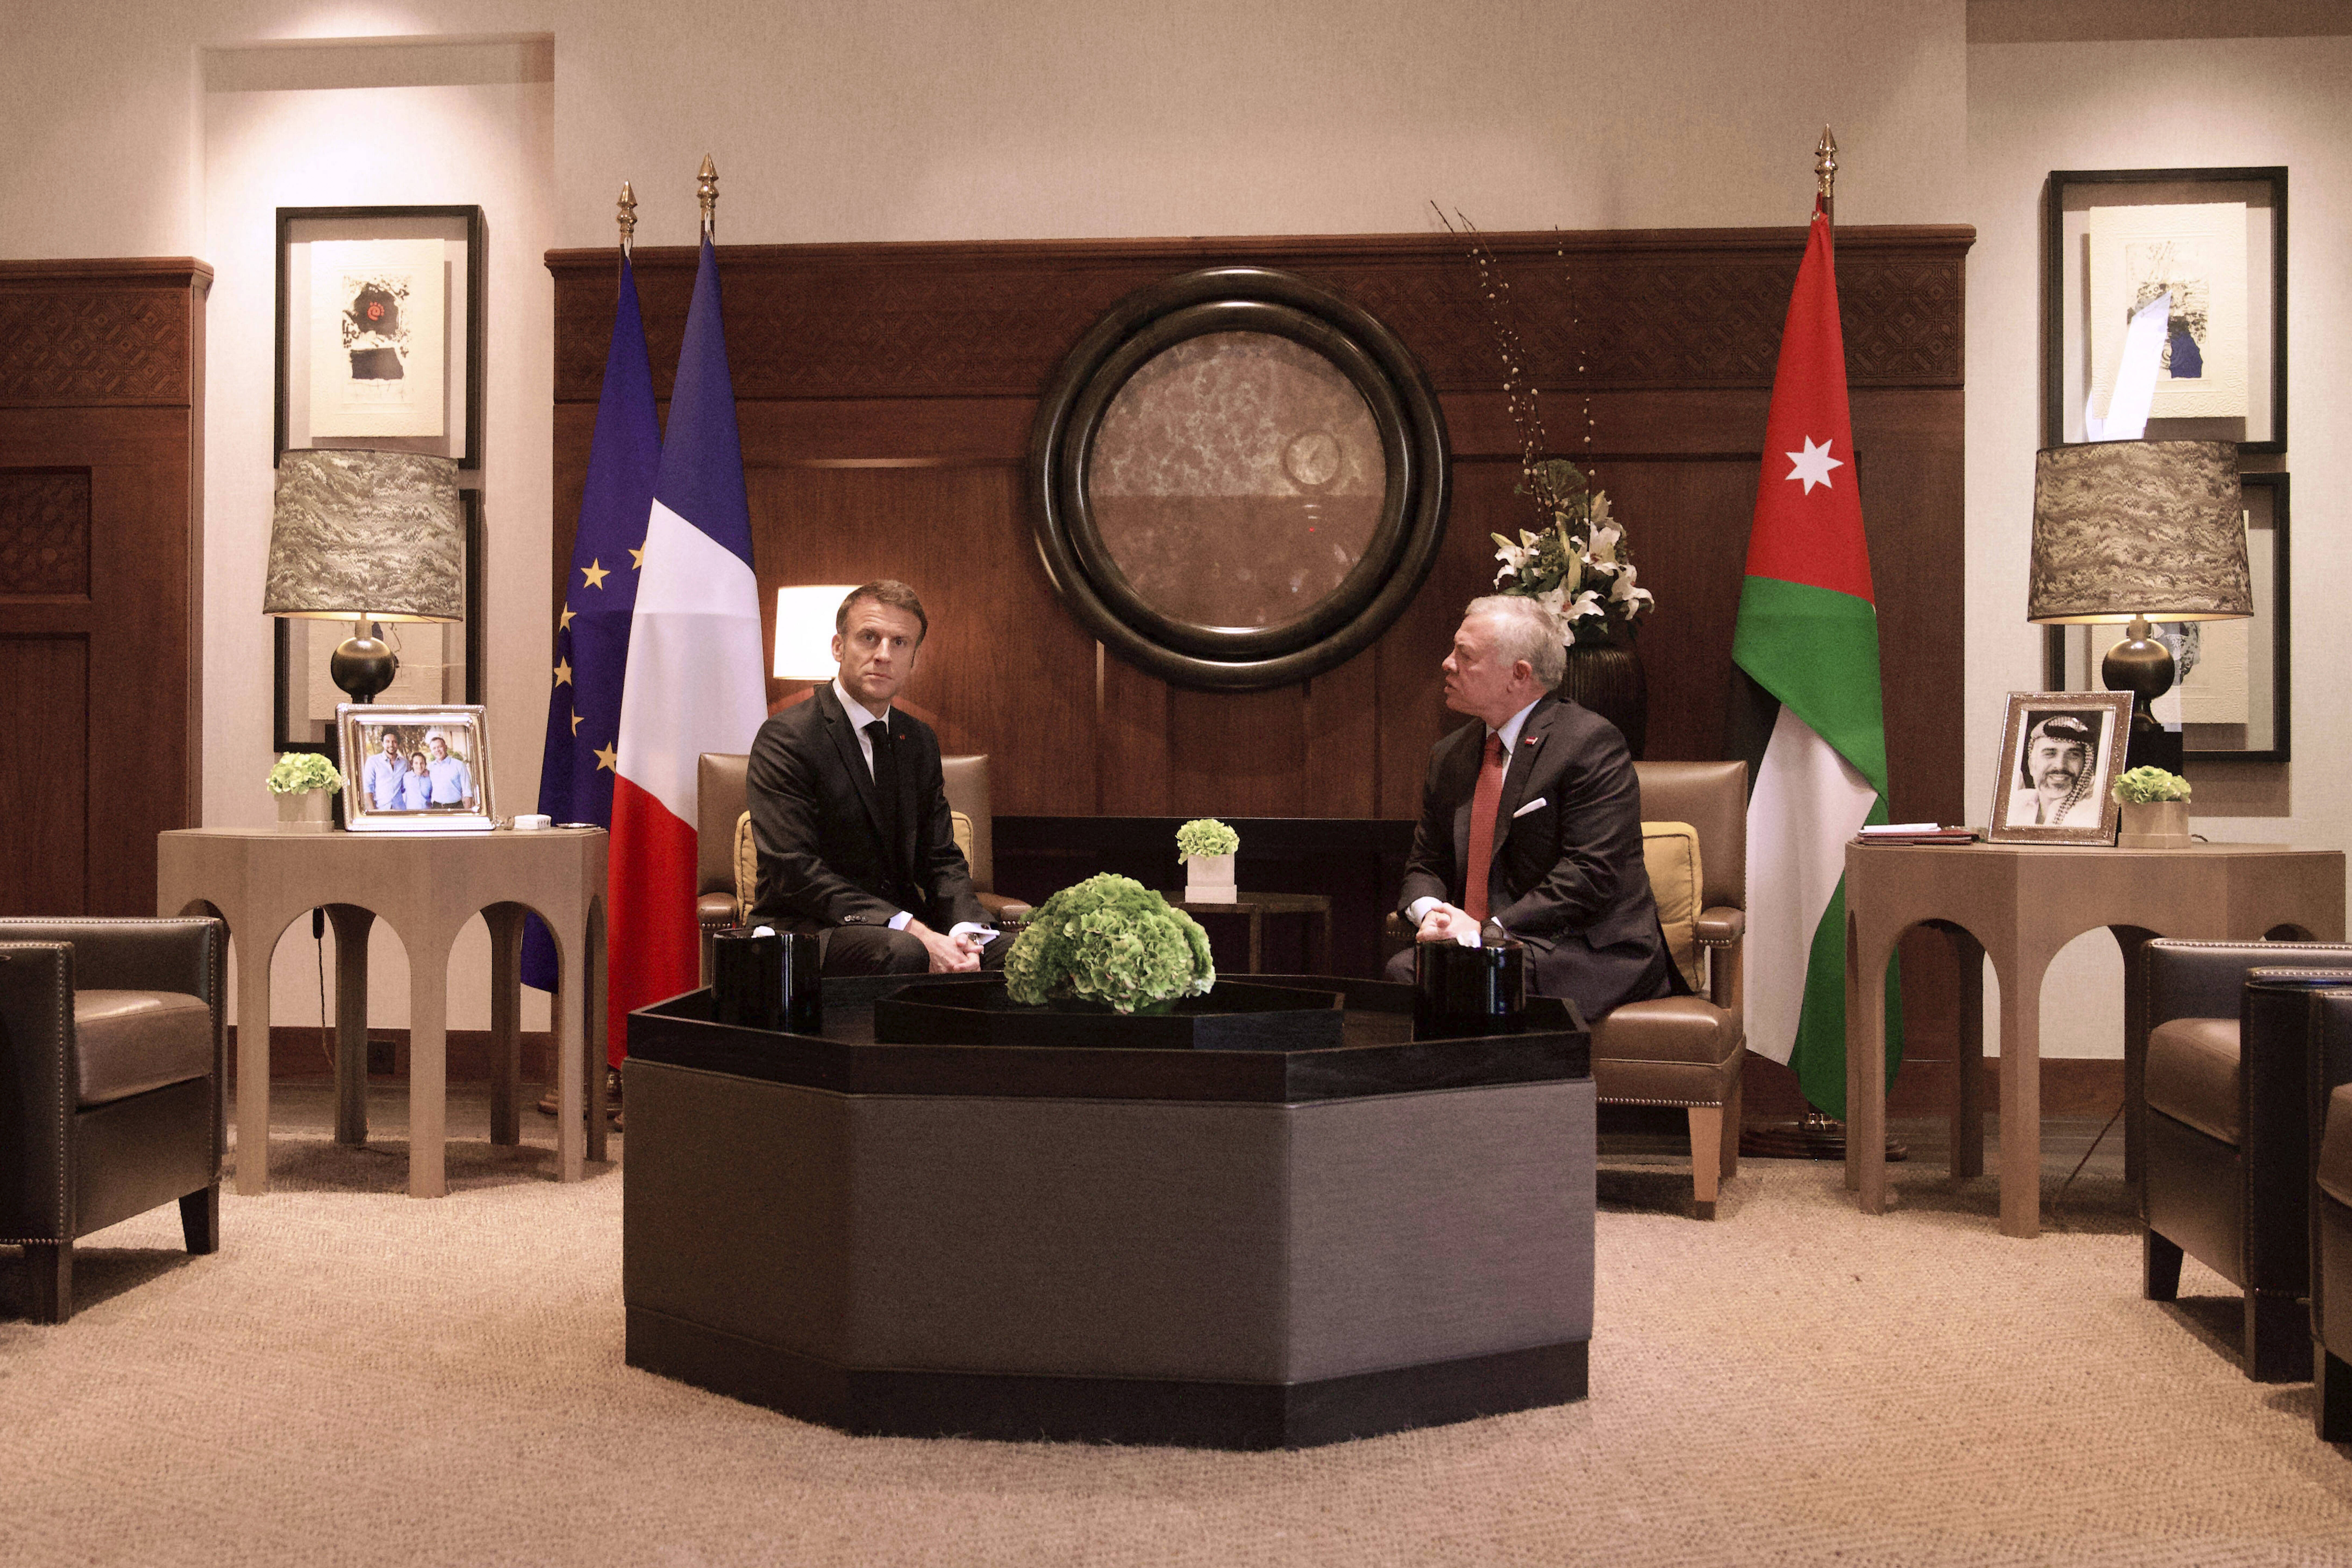 Le président français Emmanuel Macron rencontre le roi Abdallah II de Jordanie, mercredi 25 octobre. — © Nicolas Messyasz / keystone-sda.ch